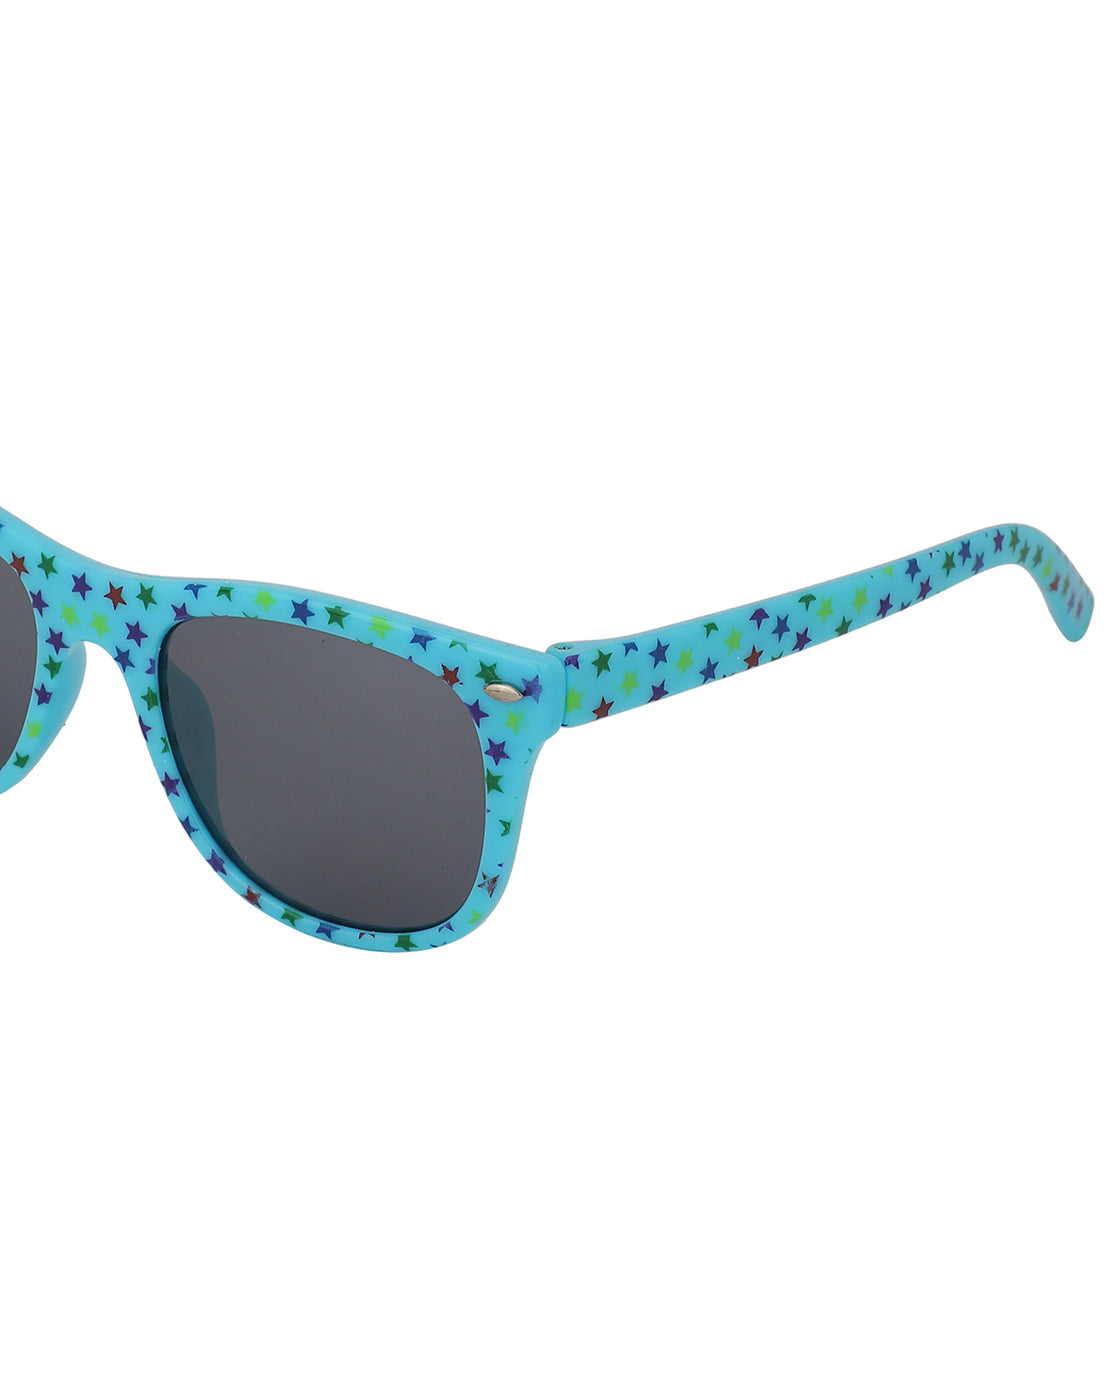 Carlton London Black Lens &amp; Blue Wayfarer Sunglasses For Boy